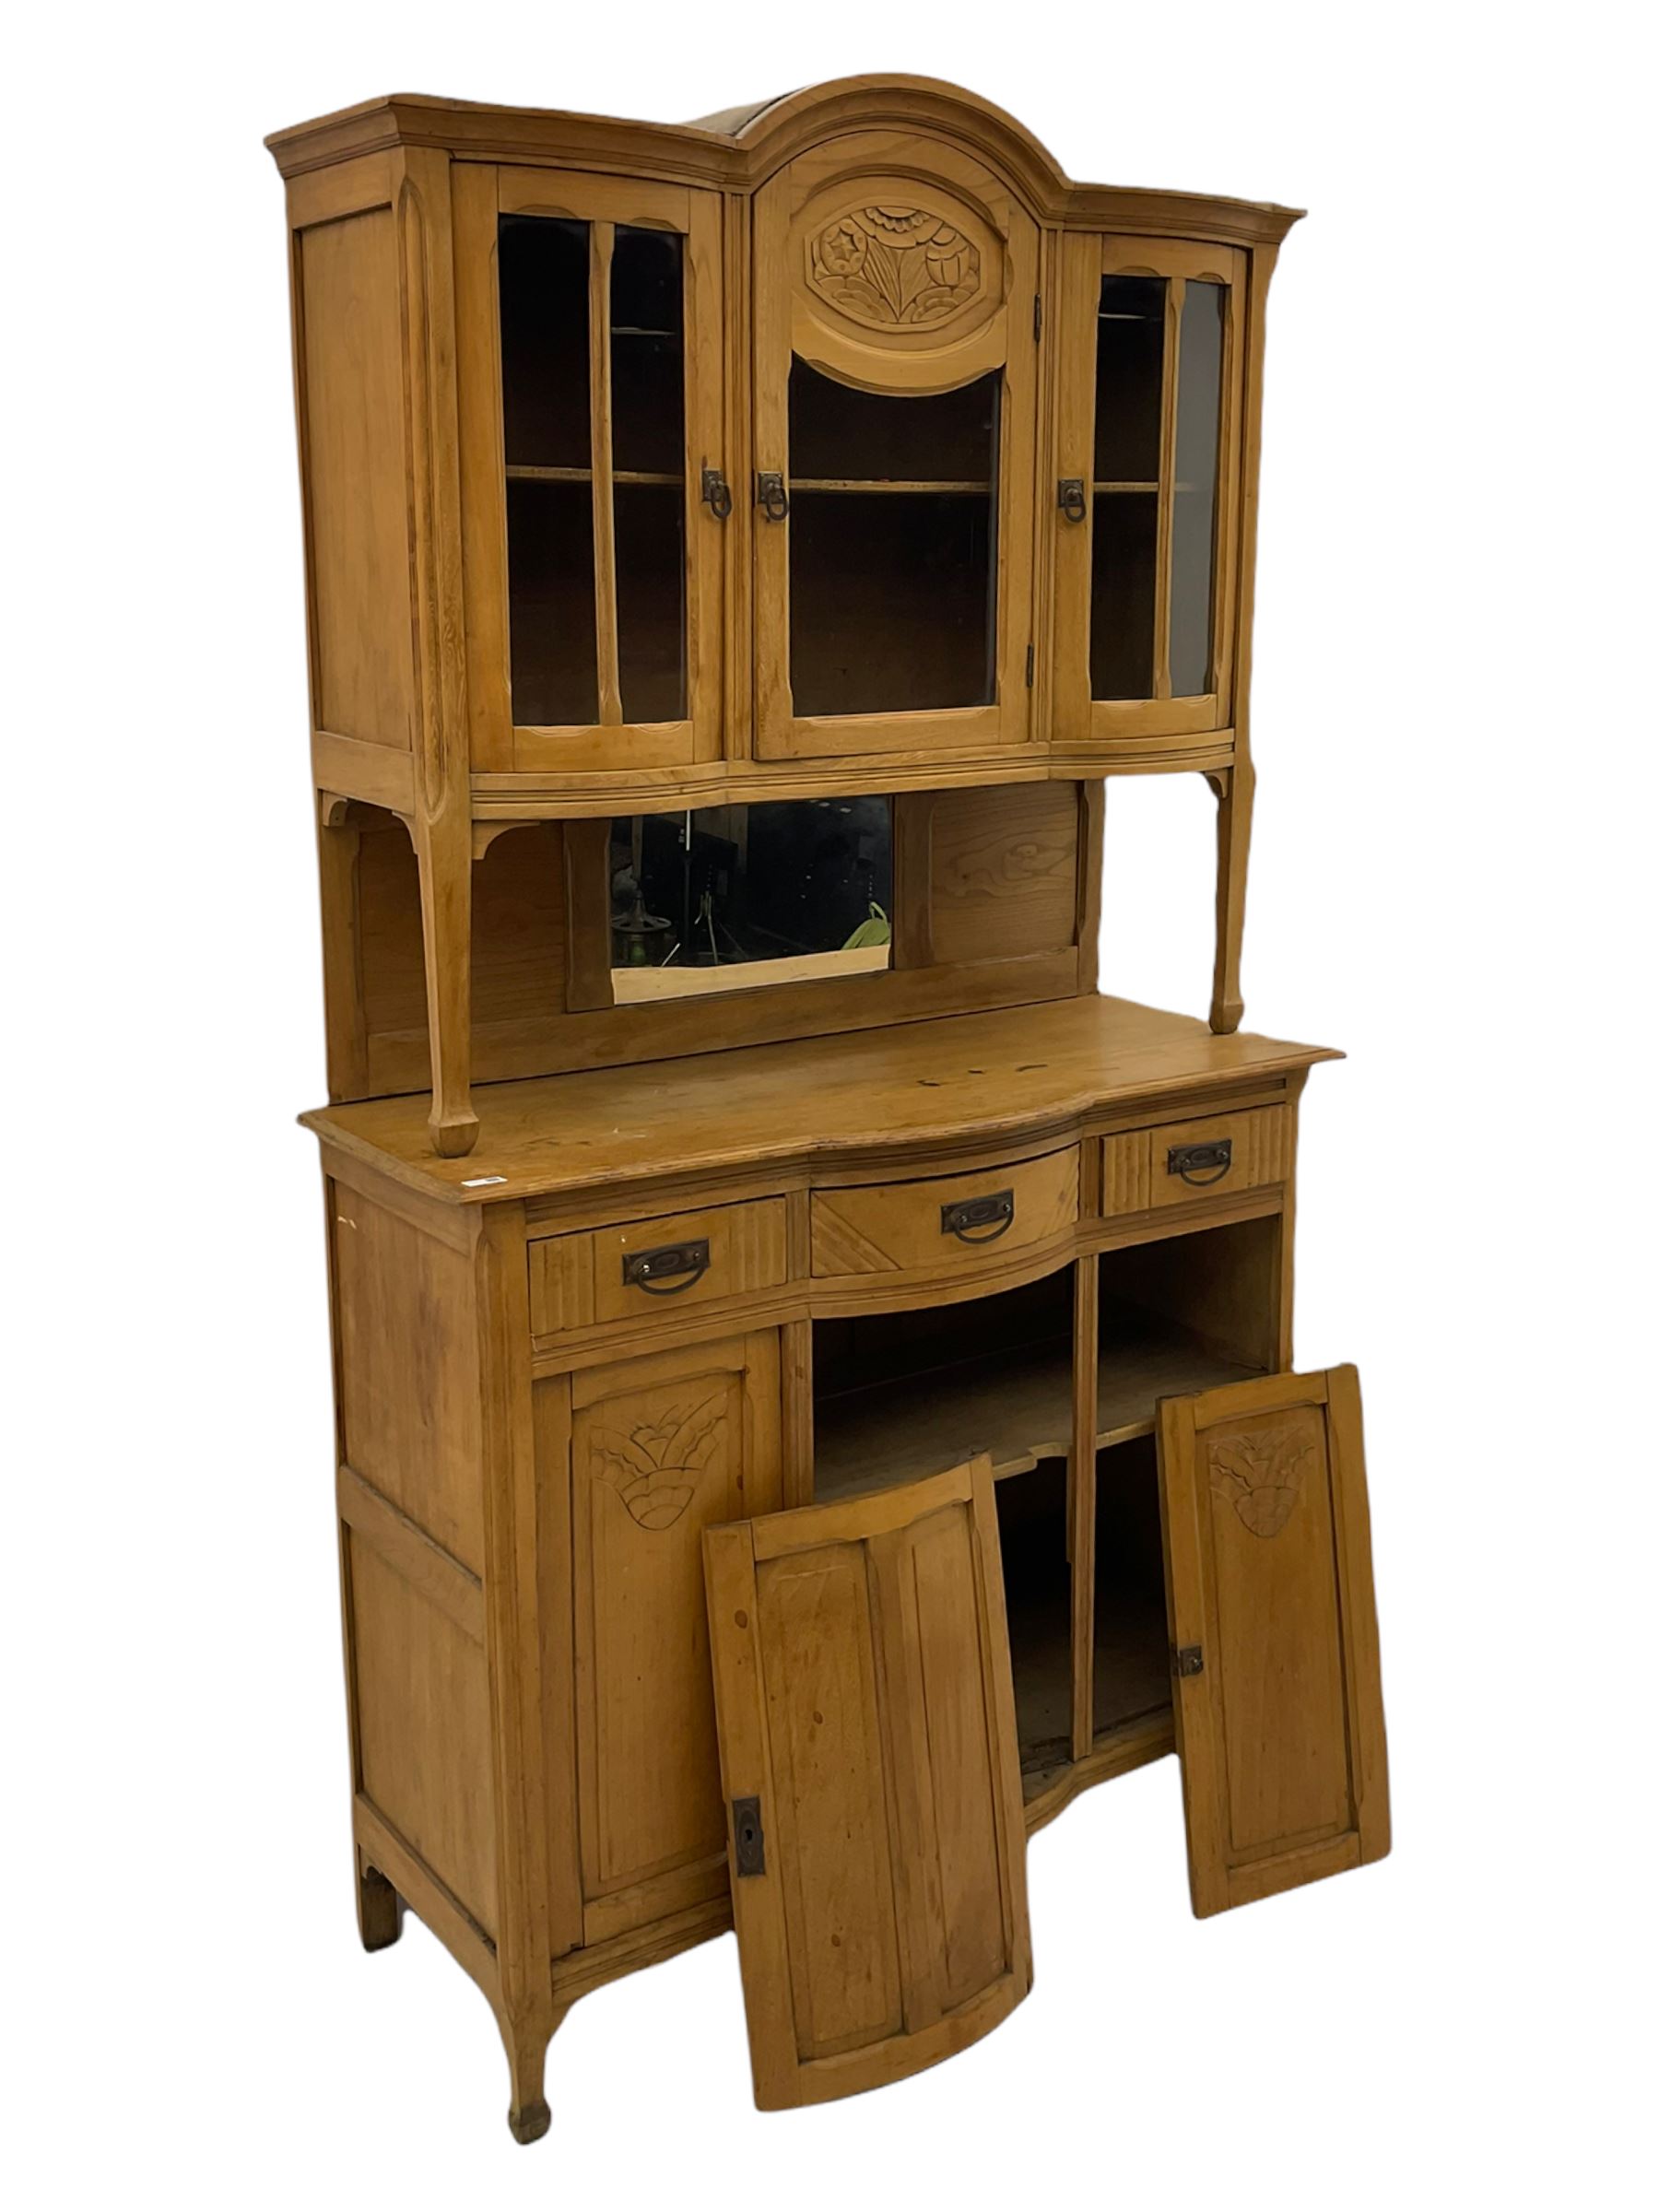 19th century elm dresser - Image 2 of 4